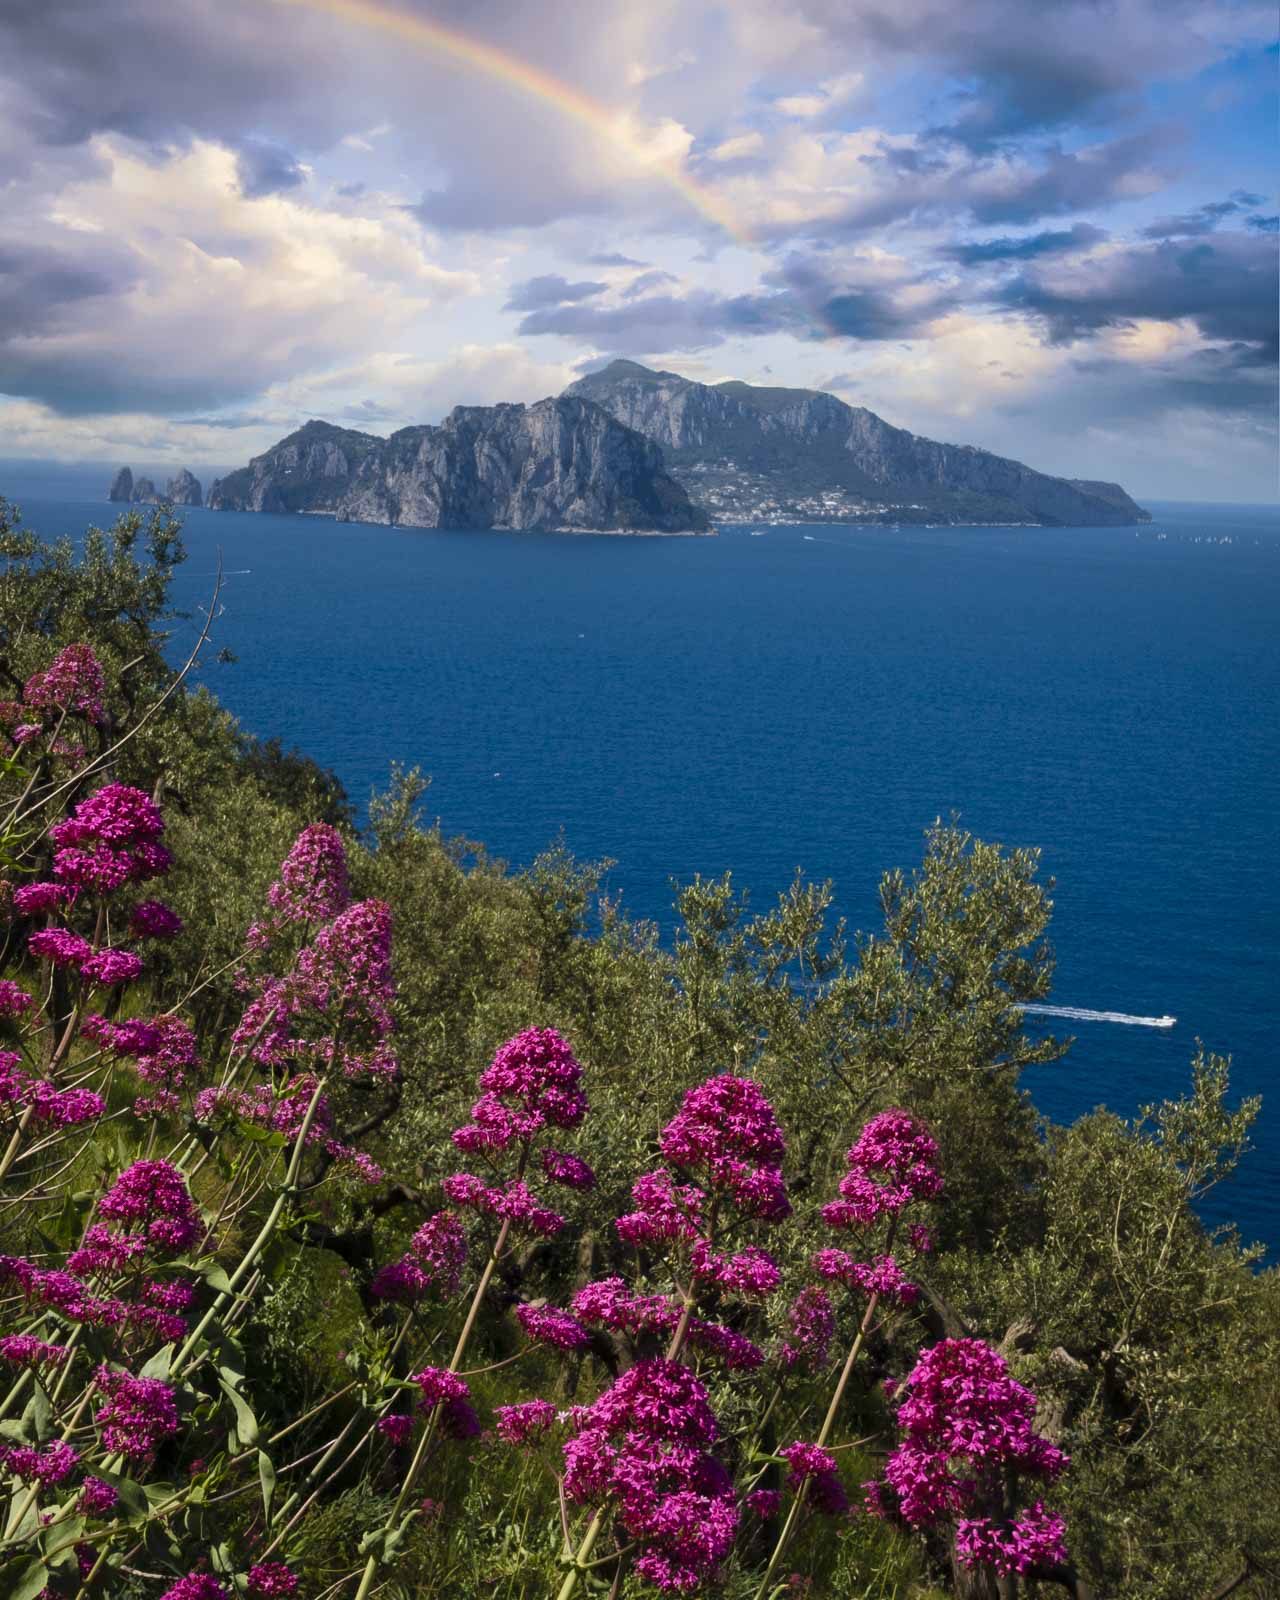 Visit the island of Capri from the Amalfi Coast